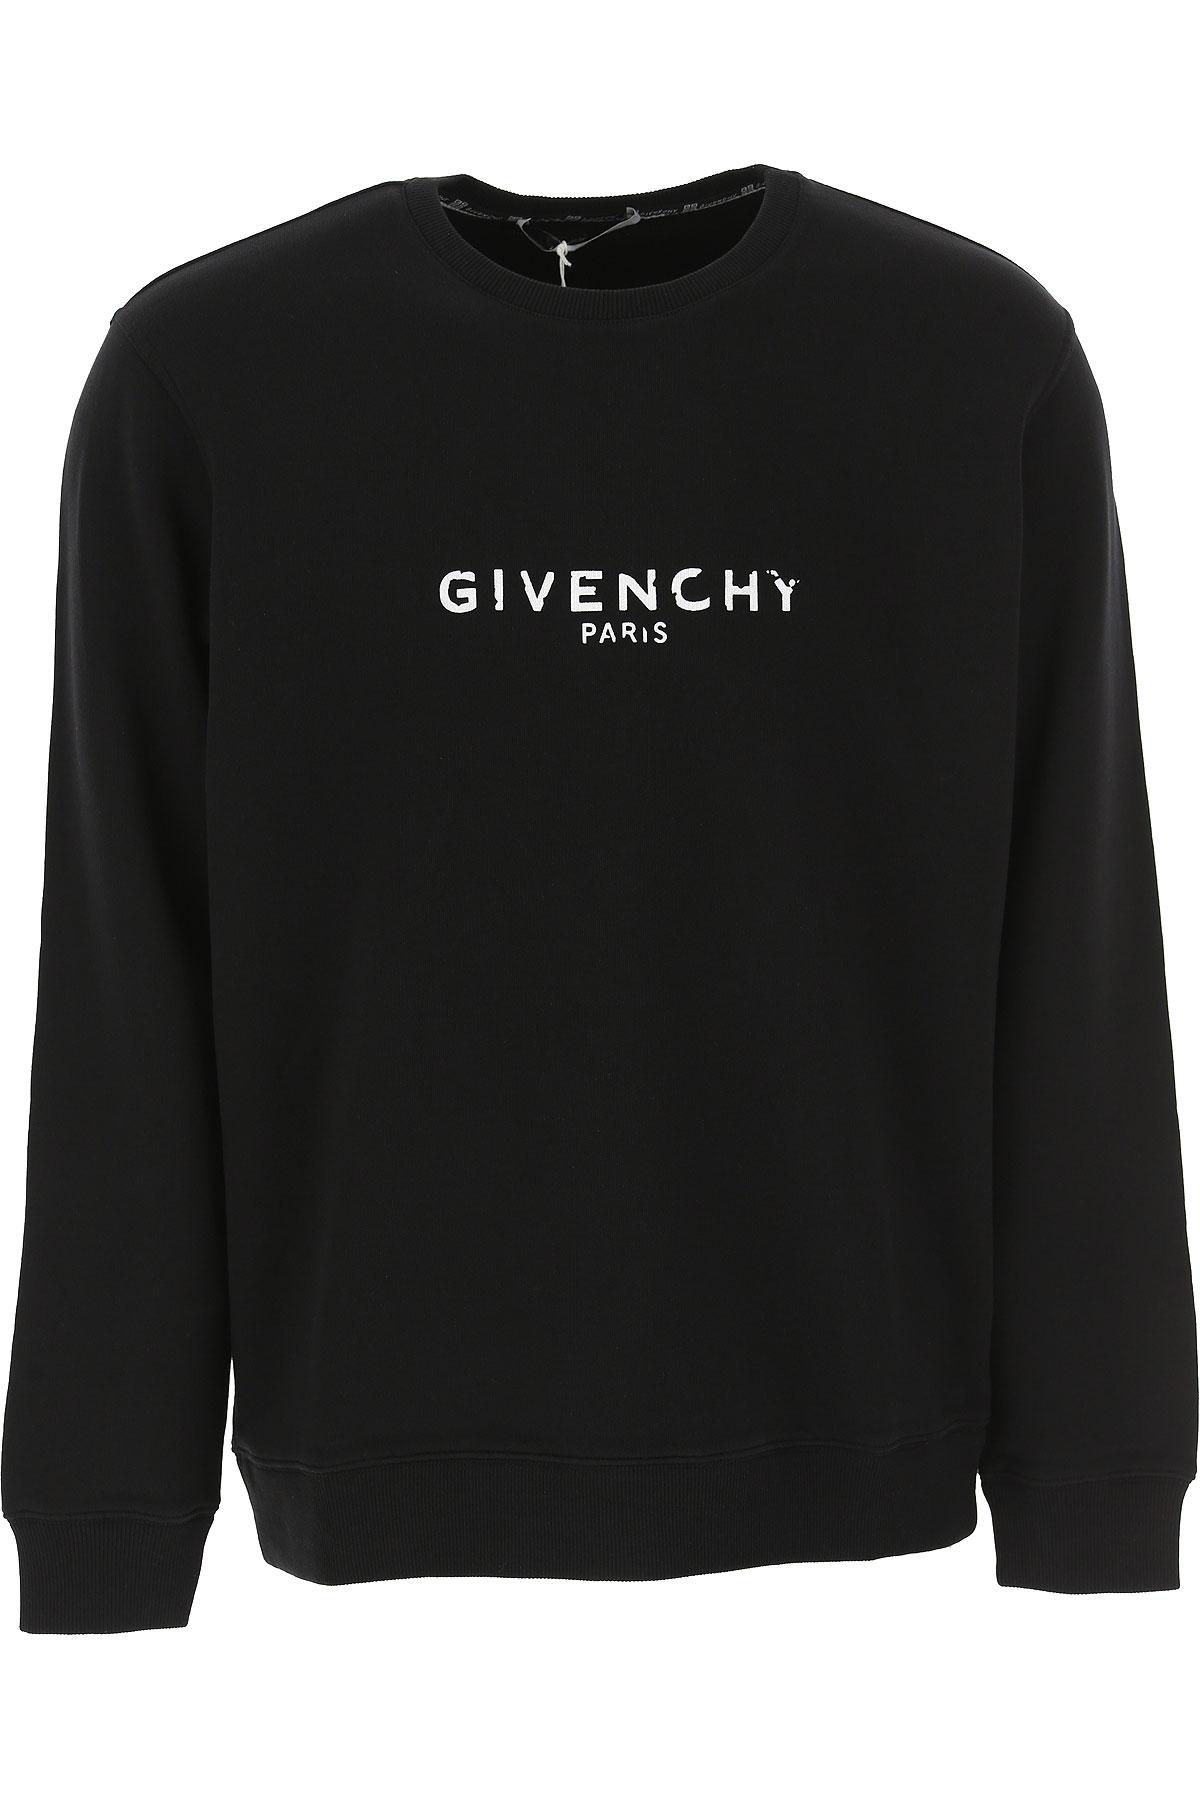 Givenchy Clothing For Men in Black for Men - Lyst